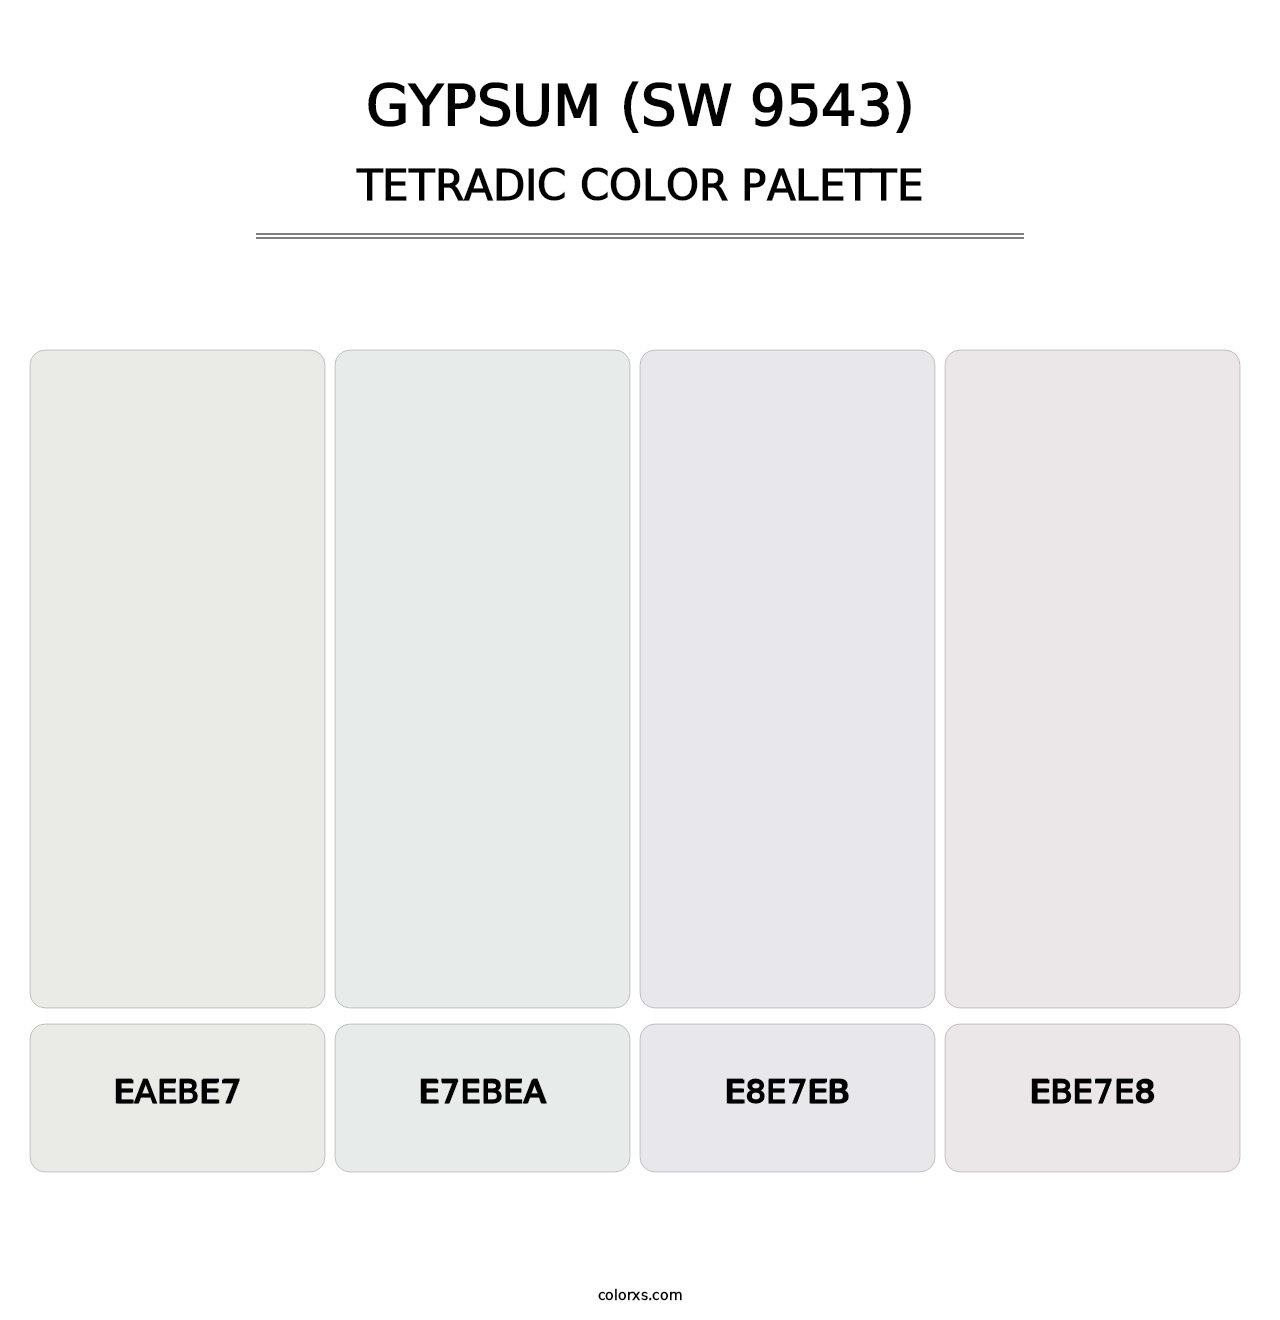 Gypsum (SW 9543) - Tetradic Color Palette